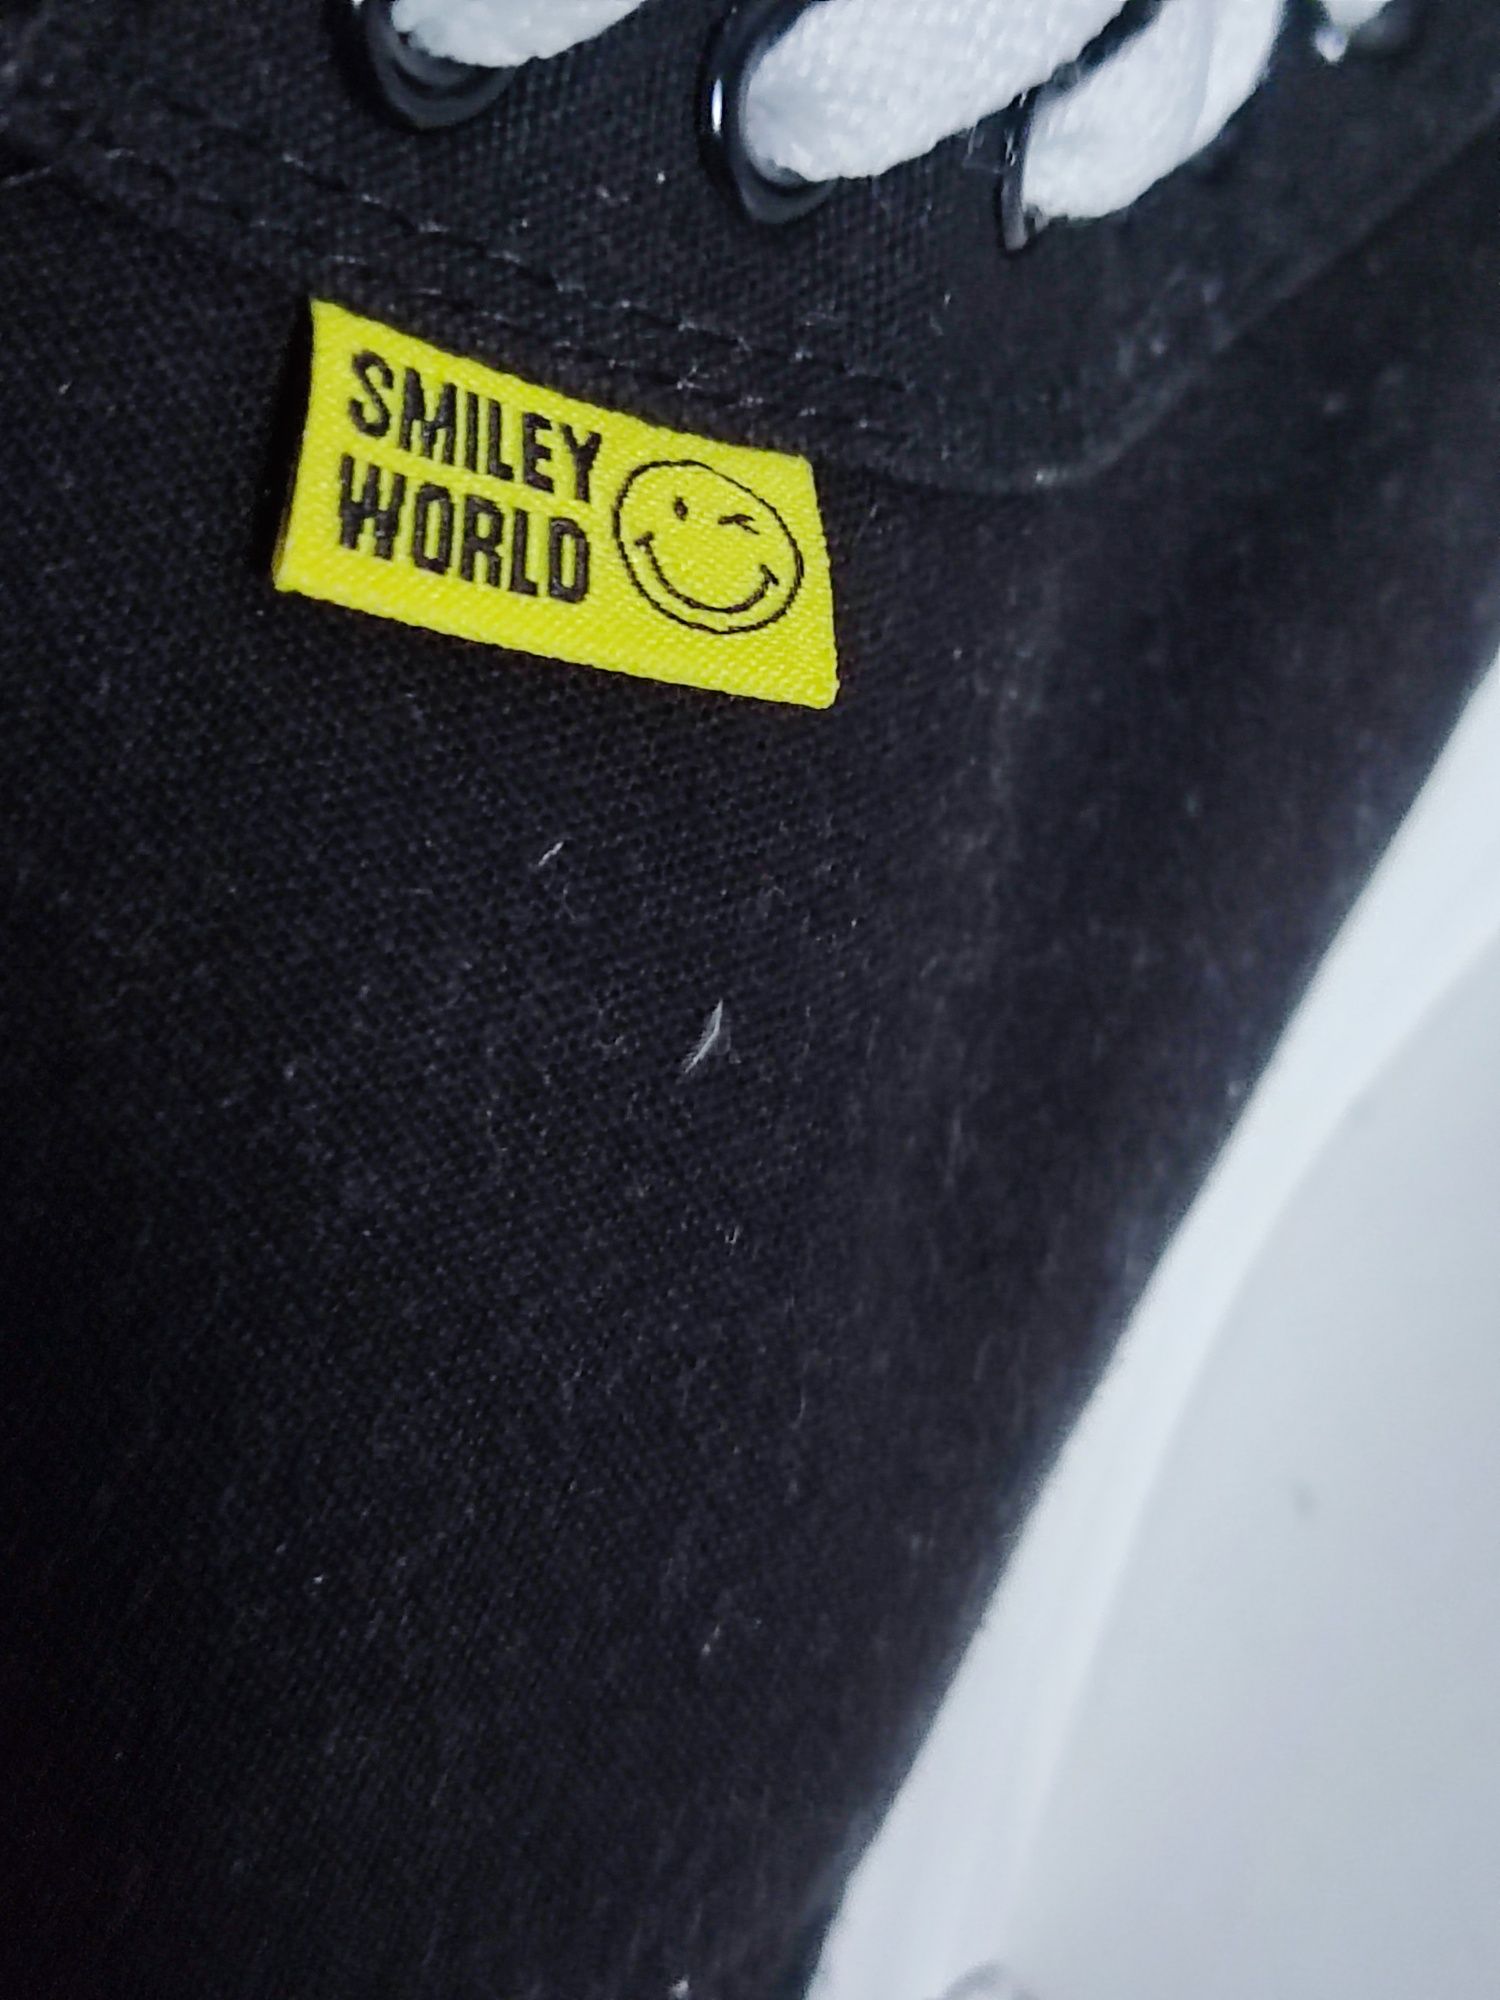 Trampki Smiley World rozm. 41